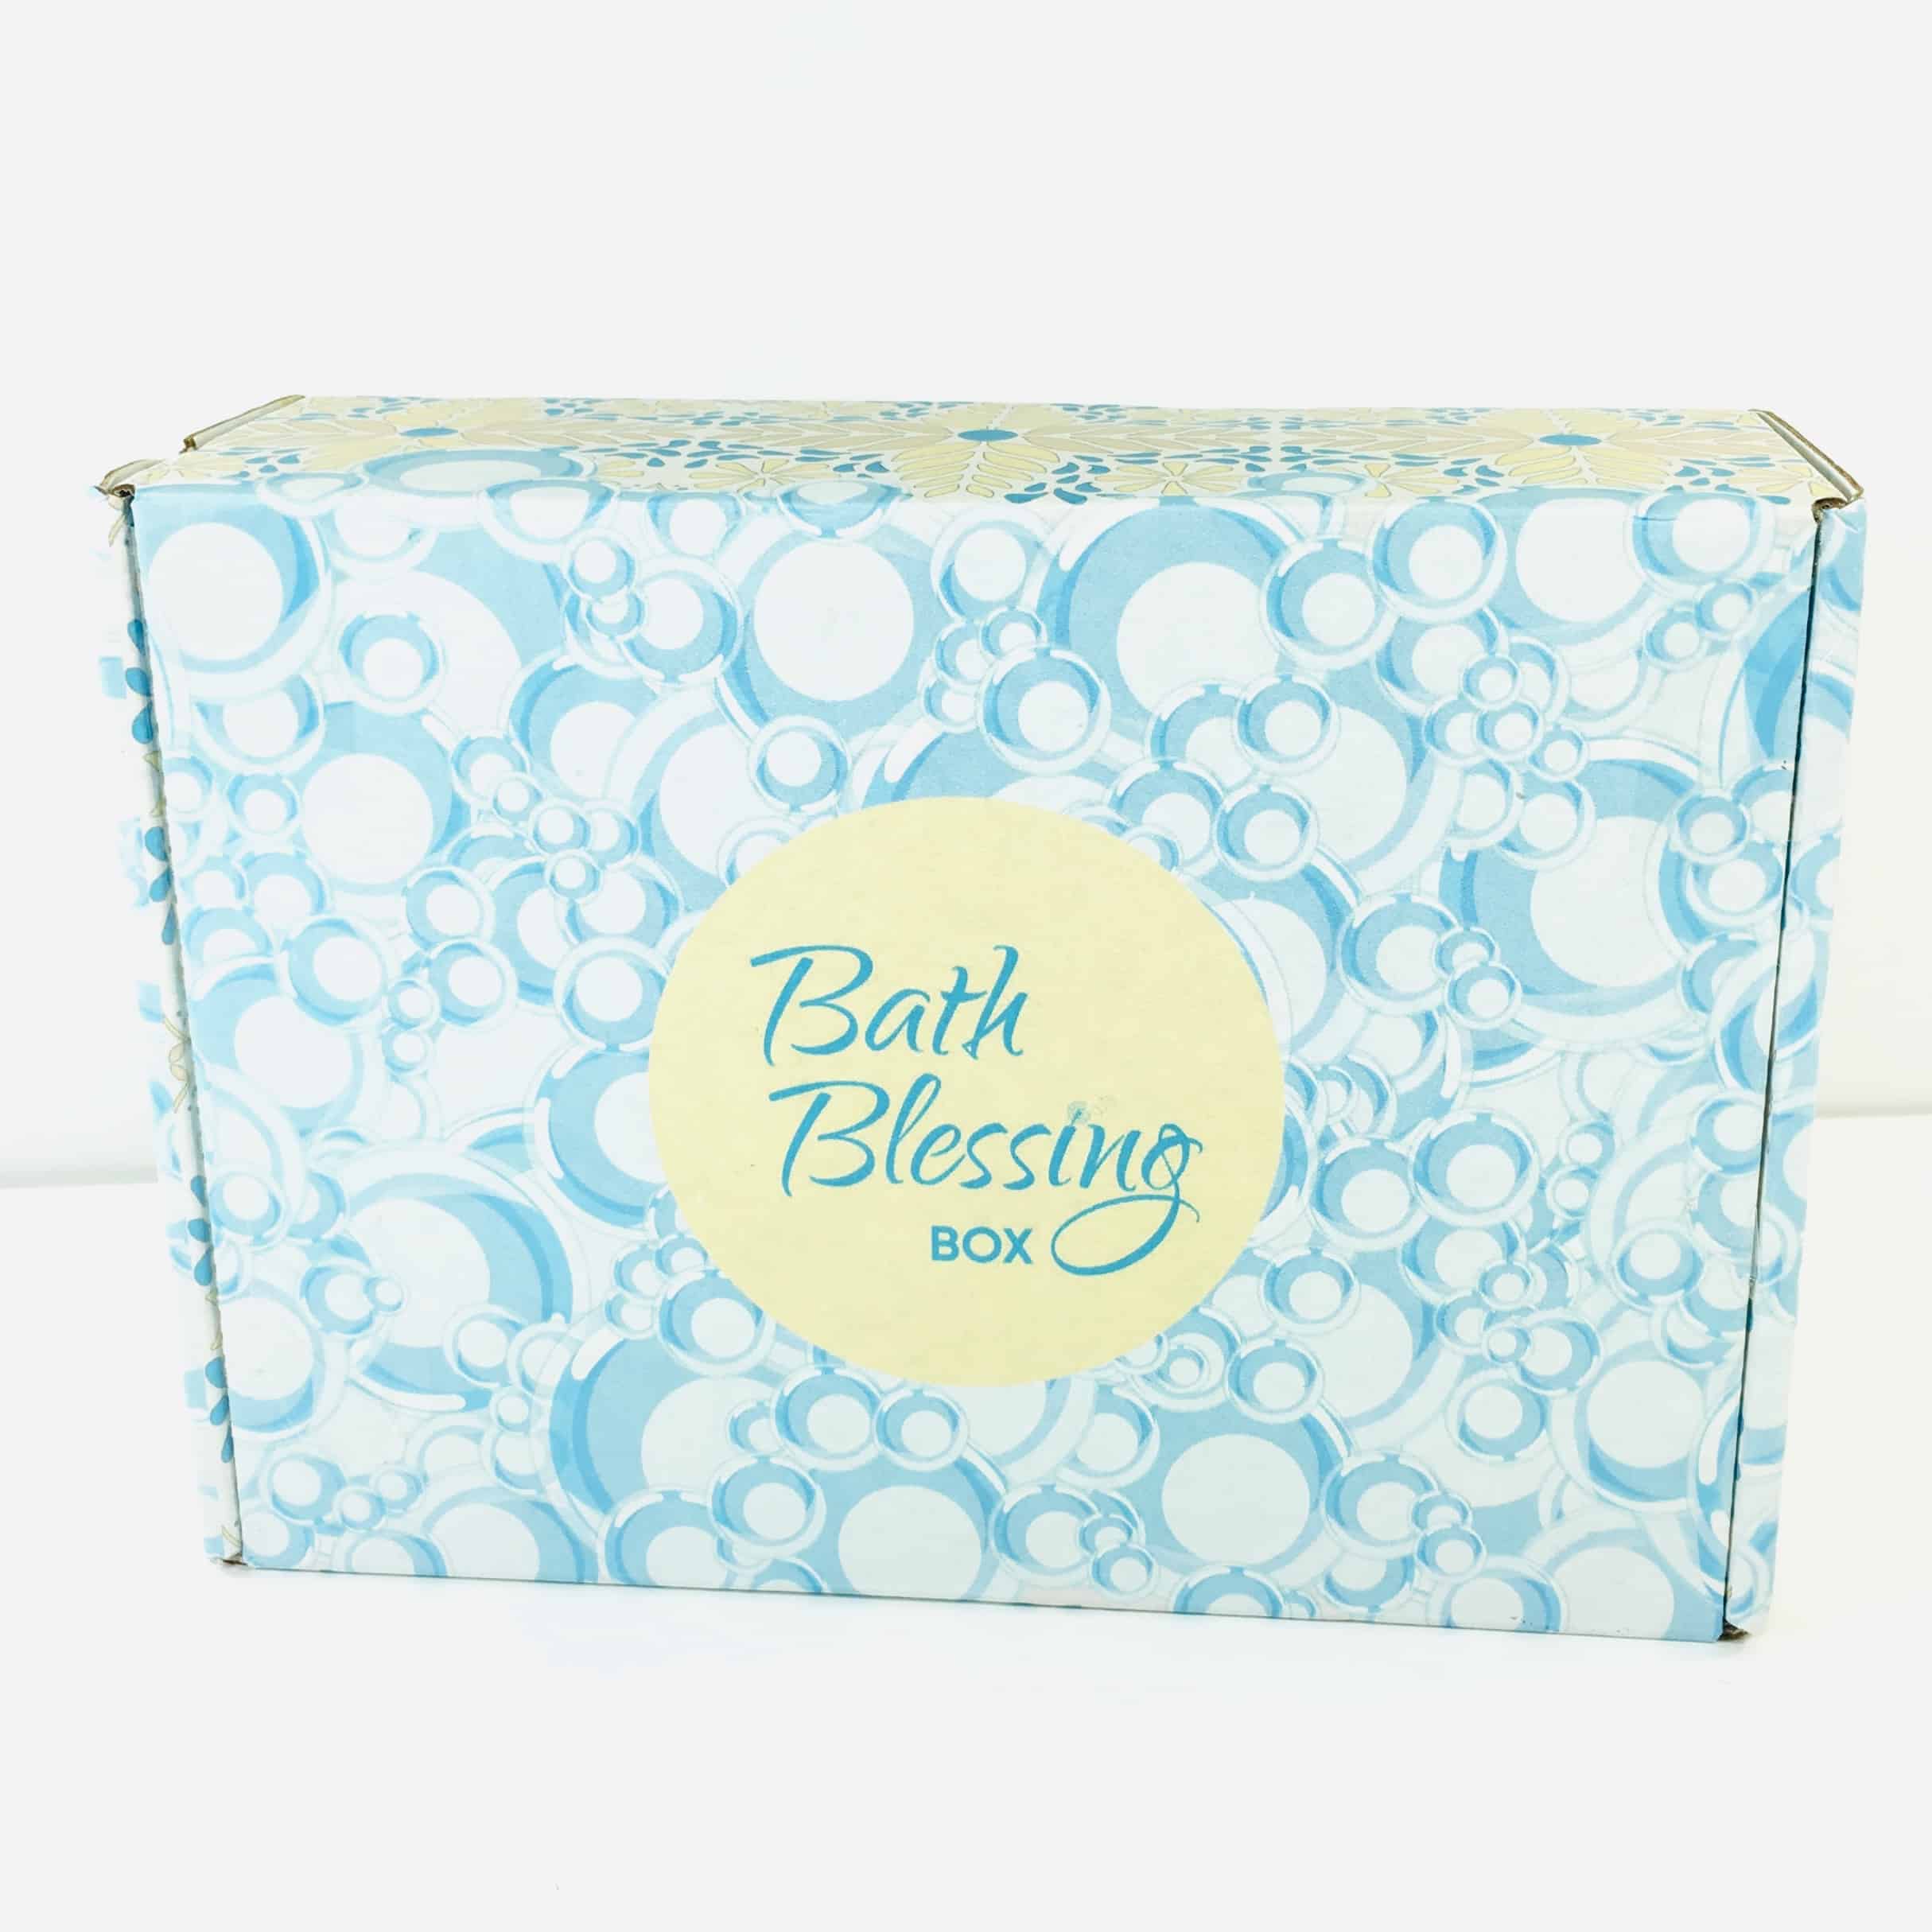  Bath Blessing Shower Subscription Box